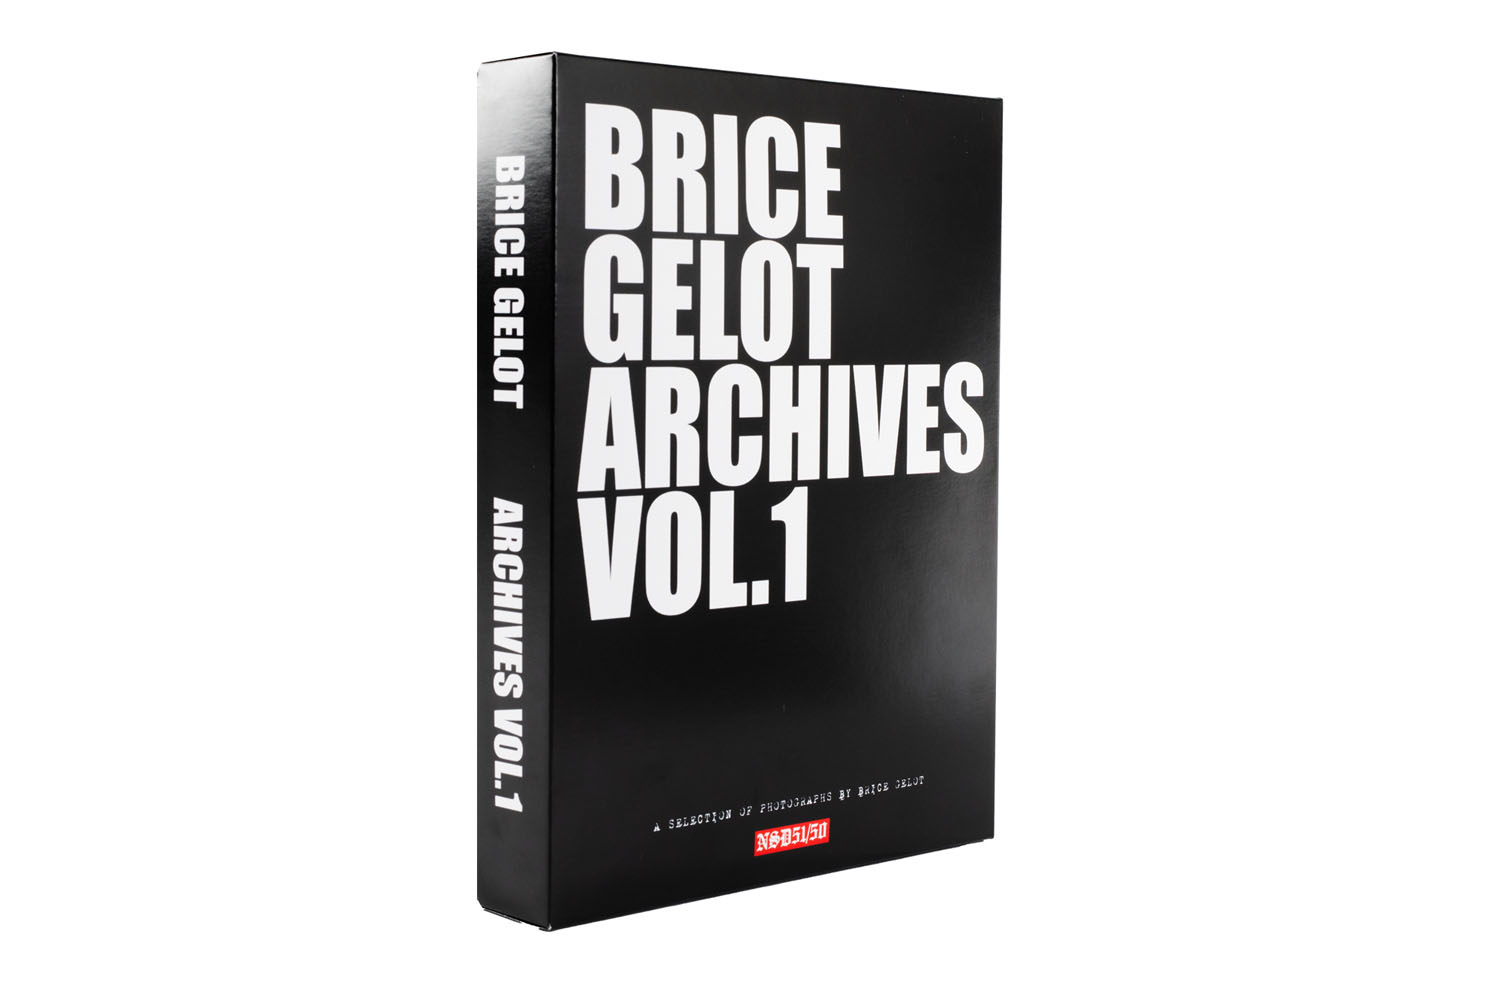 Brice Gelot Archives Book Vol.1